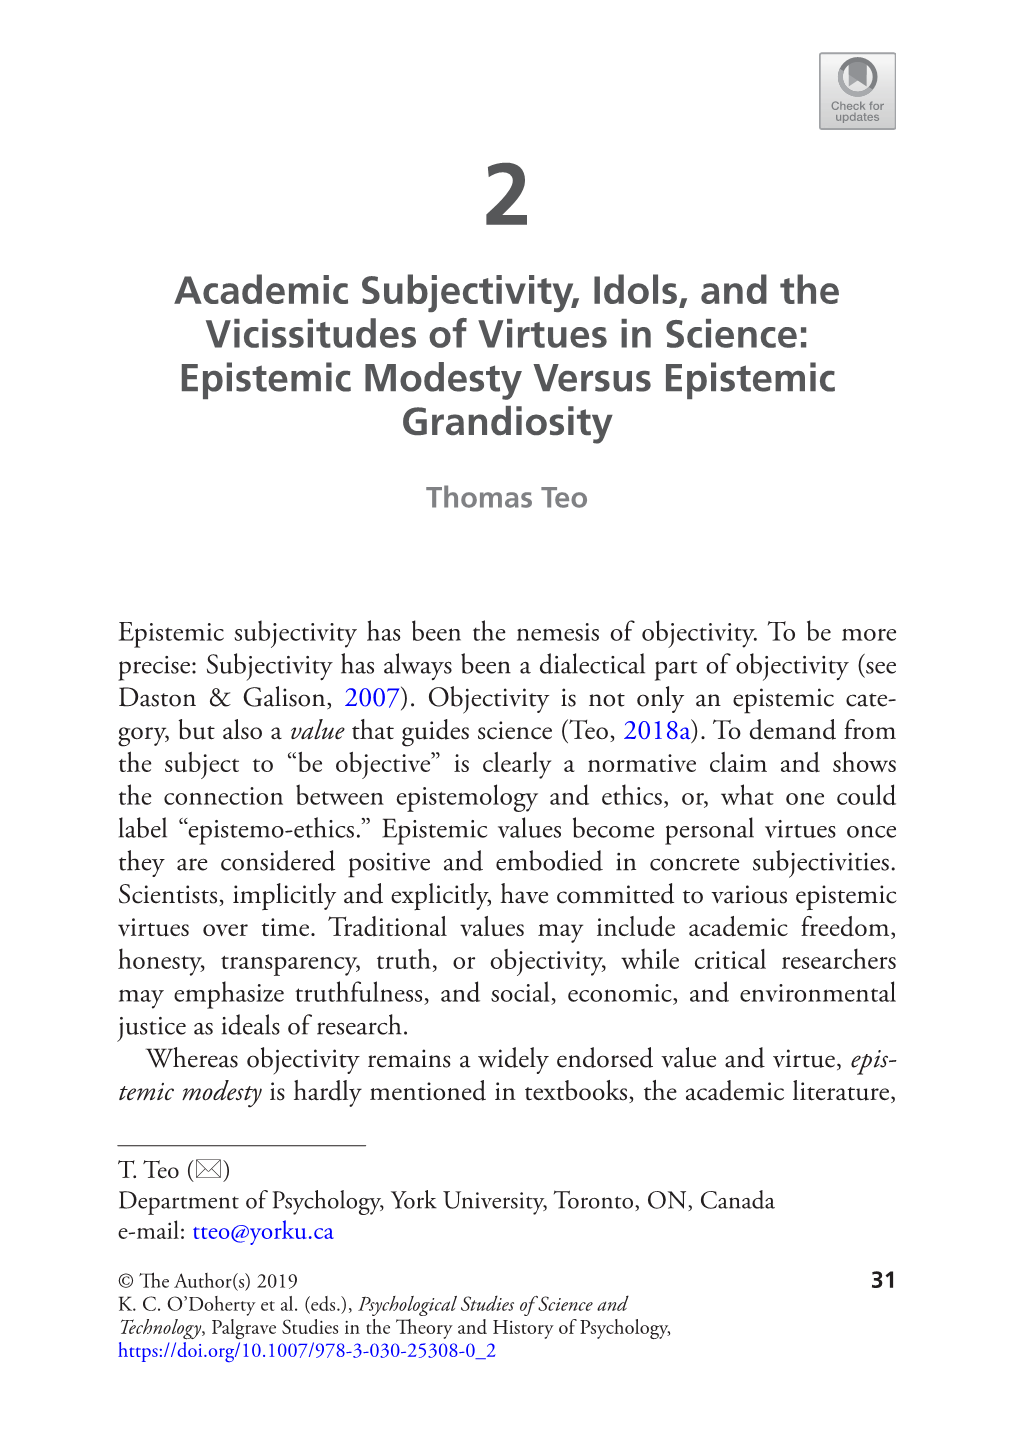 Academic Subjectivity, Idols, and the Vicissitudes of Virtues in Science: Epistemic Modesty Versus Epistemic Grandiosity